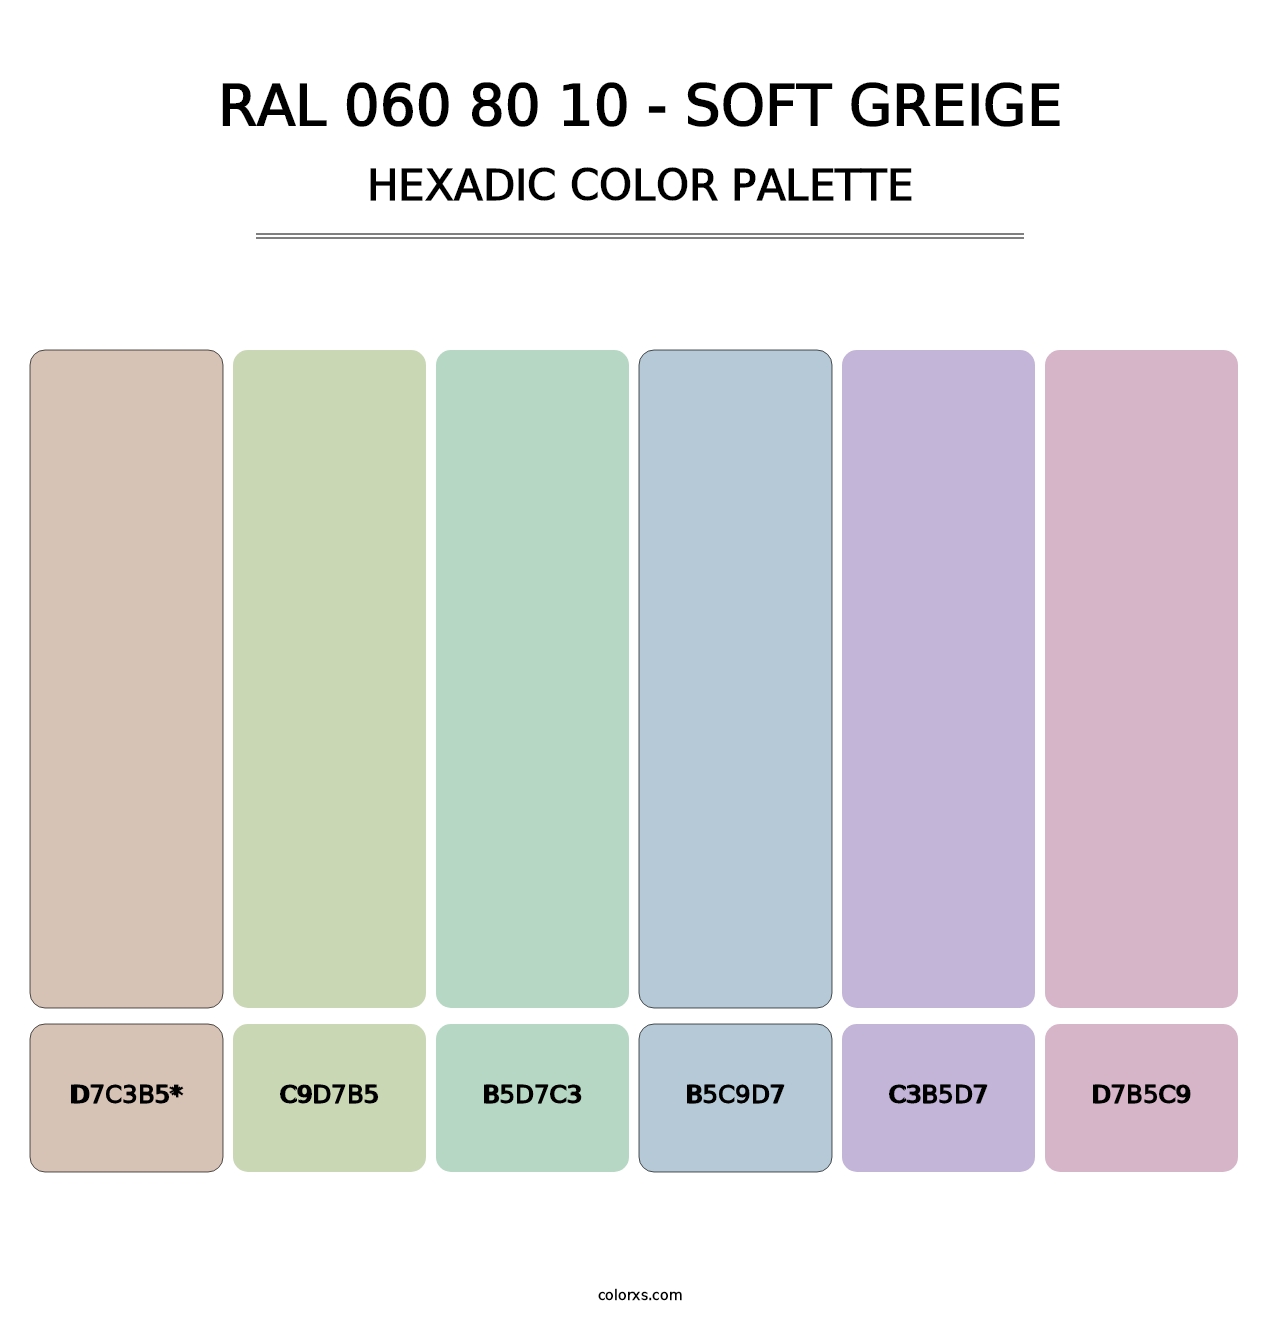 RAL 060 80 10 - Soft Greige - Hexadic Color Palette